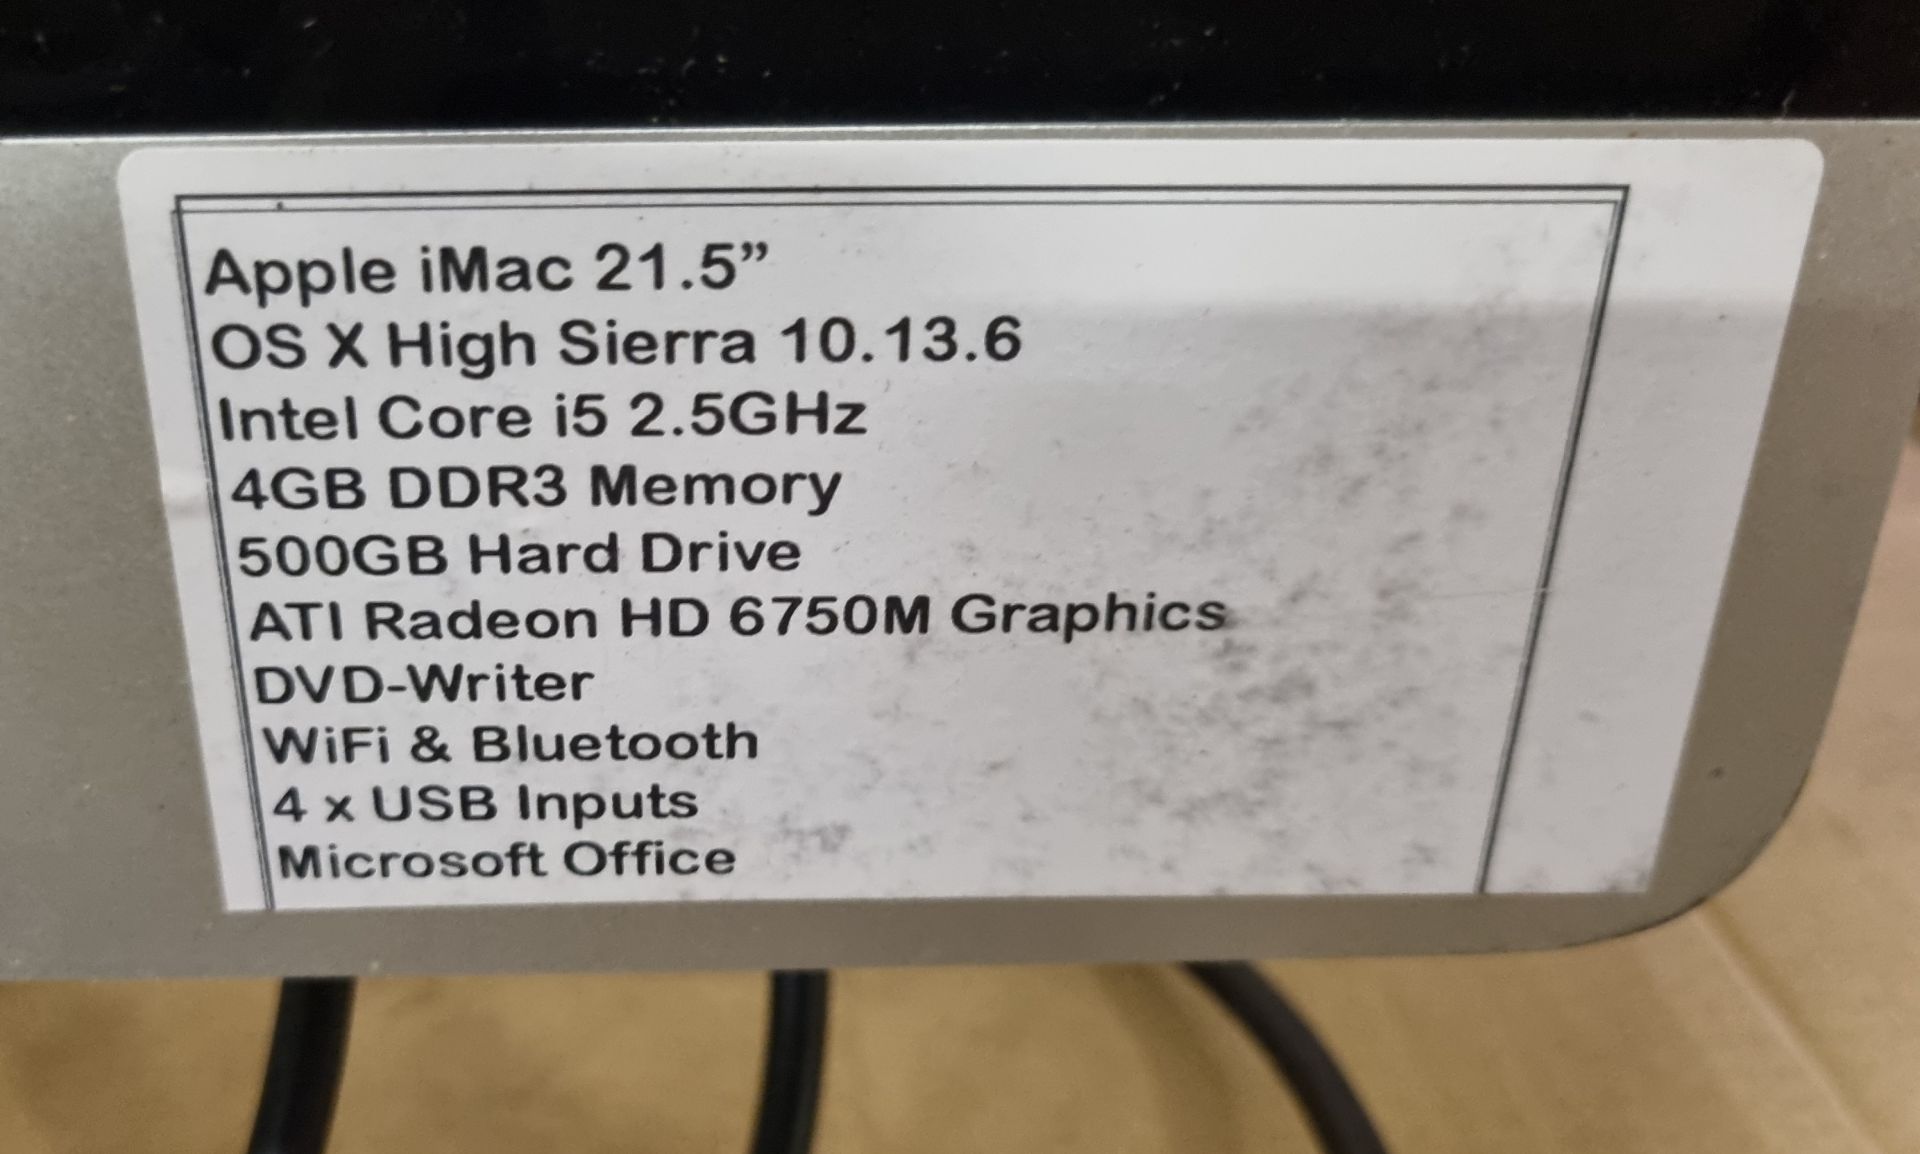 Apple iMac 21.5” OS X High Sierra Intel Core i5 Quad Core 4GB Memory 500GB HD, WiFi, Bluetooth - Image 3 of 4